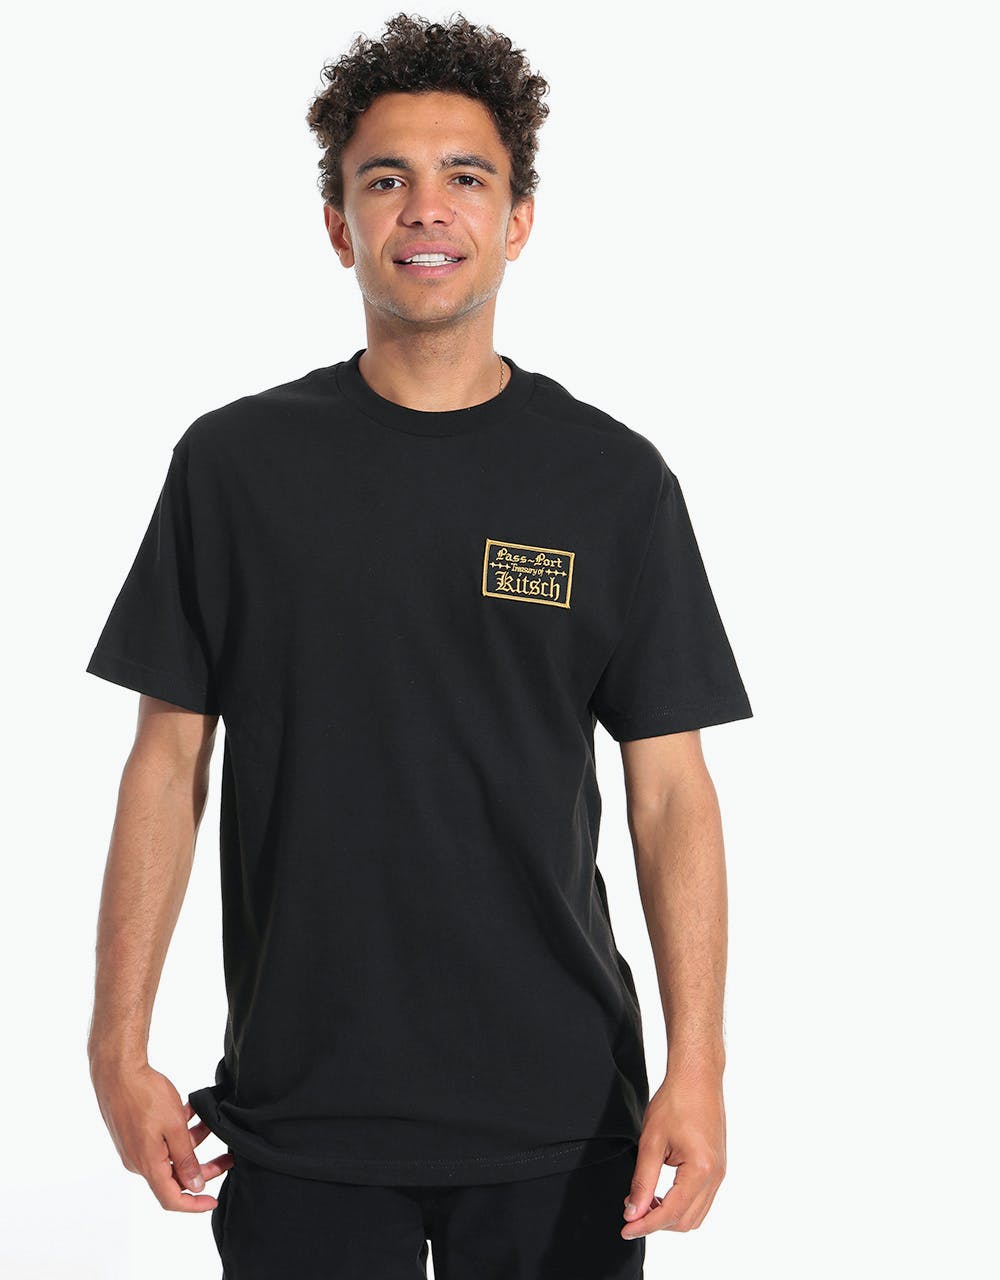 Pass Port Treasury Patch T-Shirt - Black